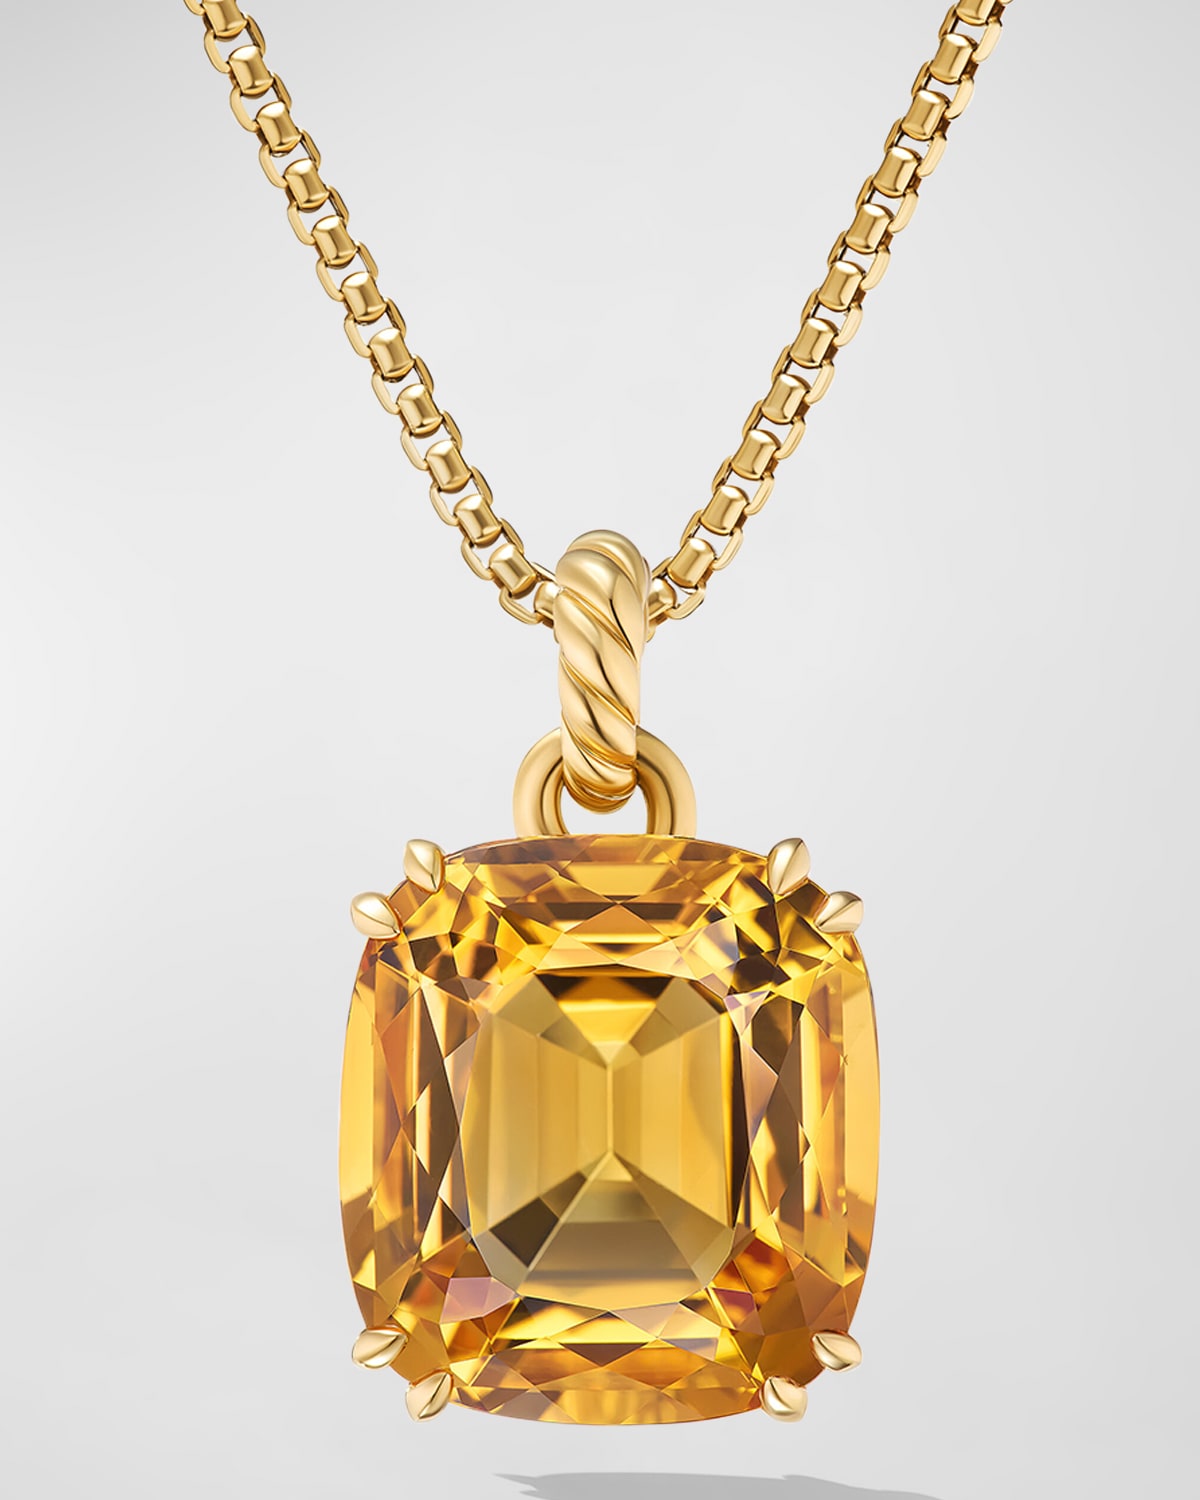 Marbella Enhancer with Gemstones in 18K Gold, 22x20mm